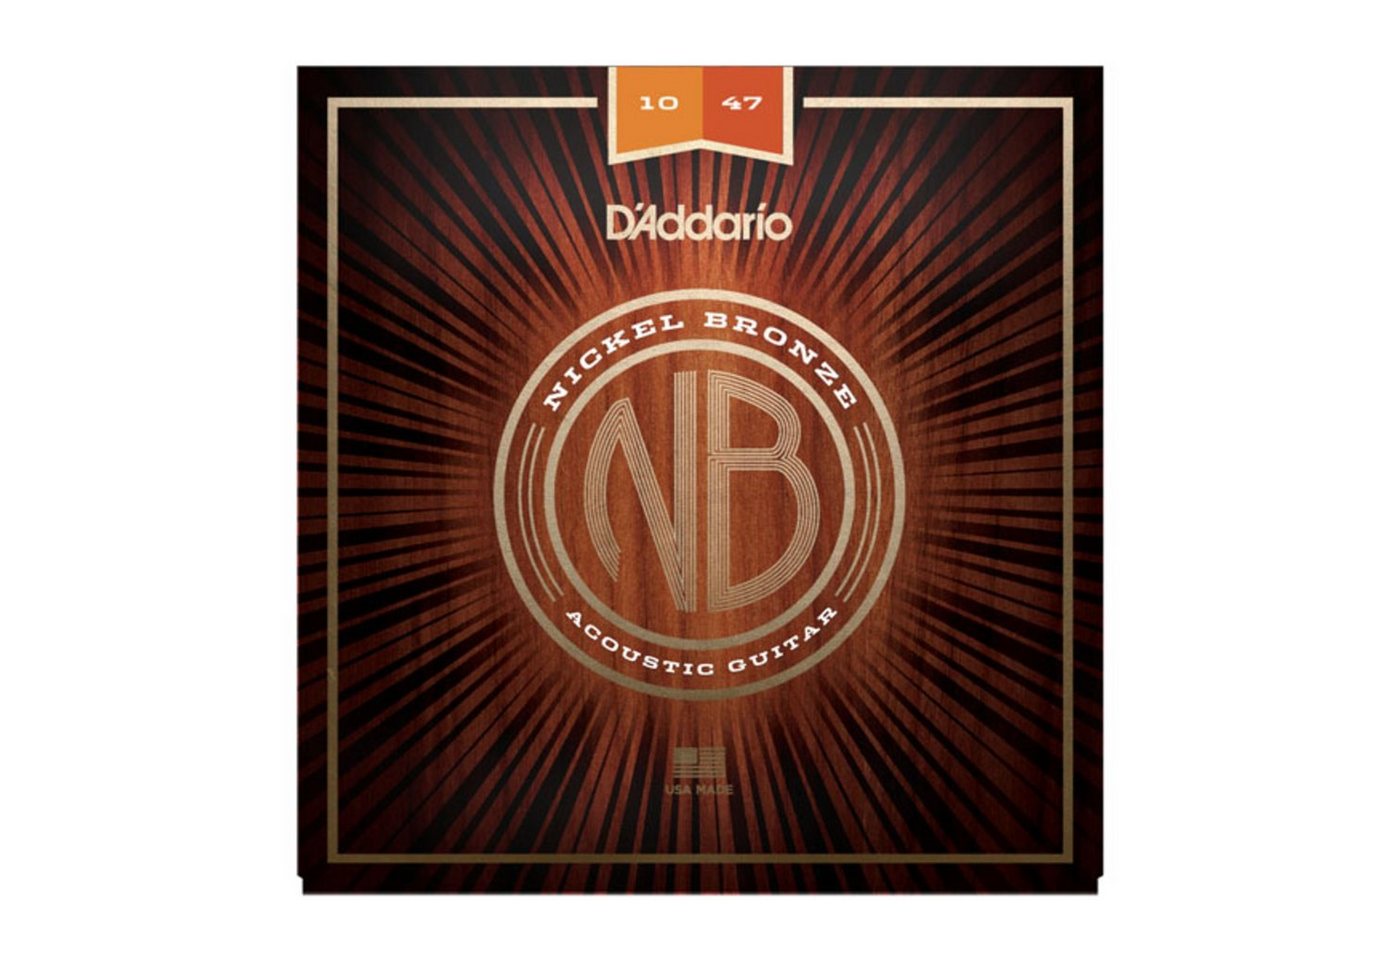 Daddario Saiten, (NB1047 10-47 Nickel Bronze Acoustic Extra Light), NB1047 10-47 Nickel Bronze Acoustic Extra Light - von Daddario